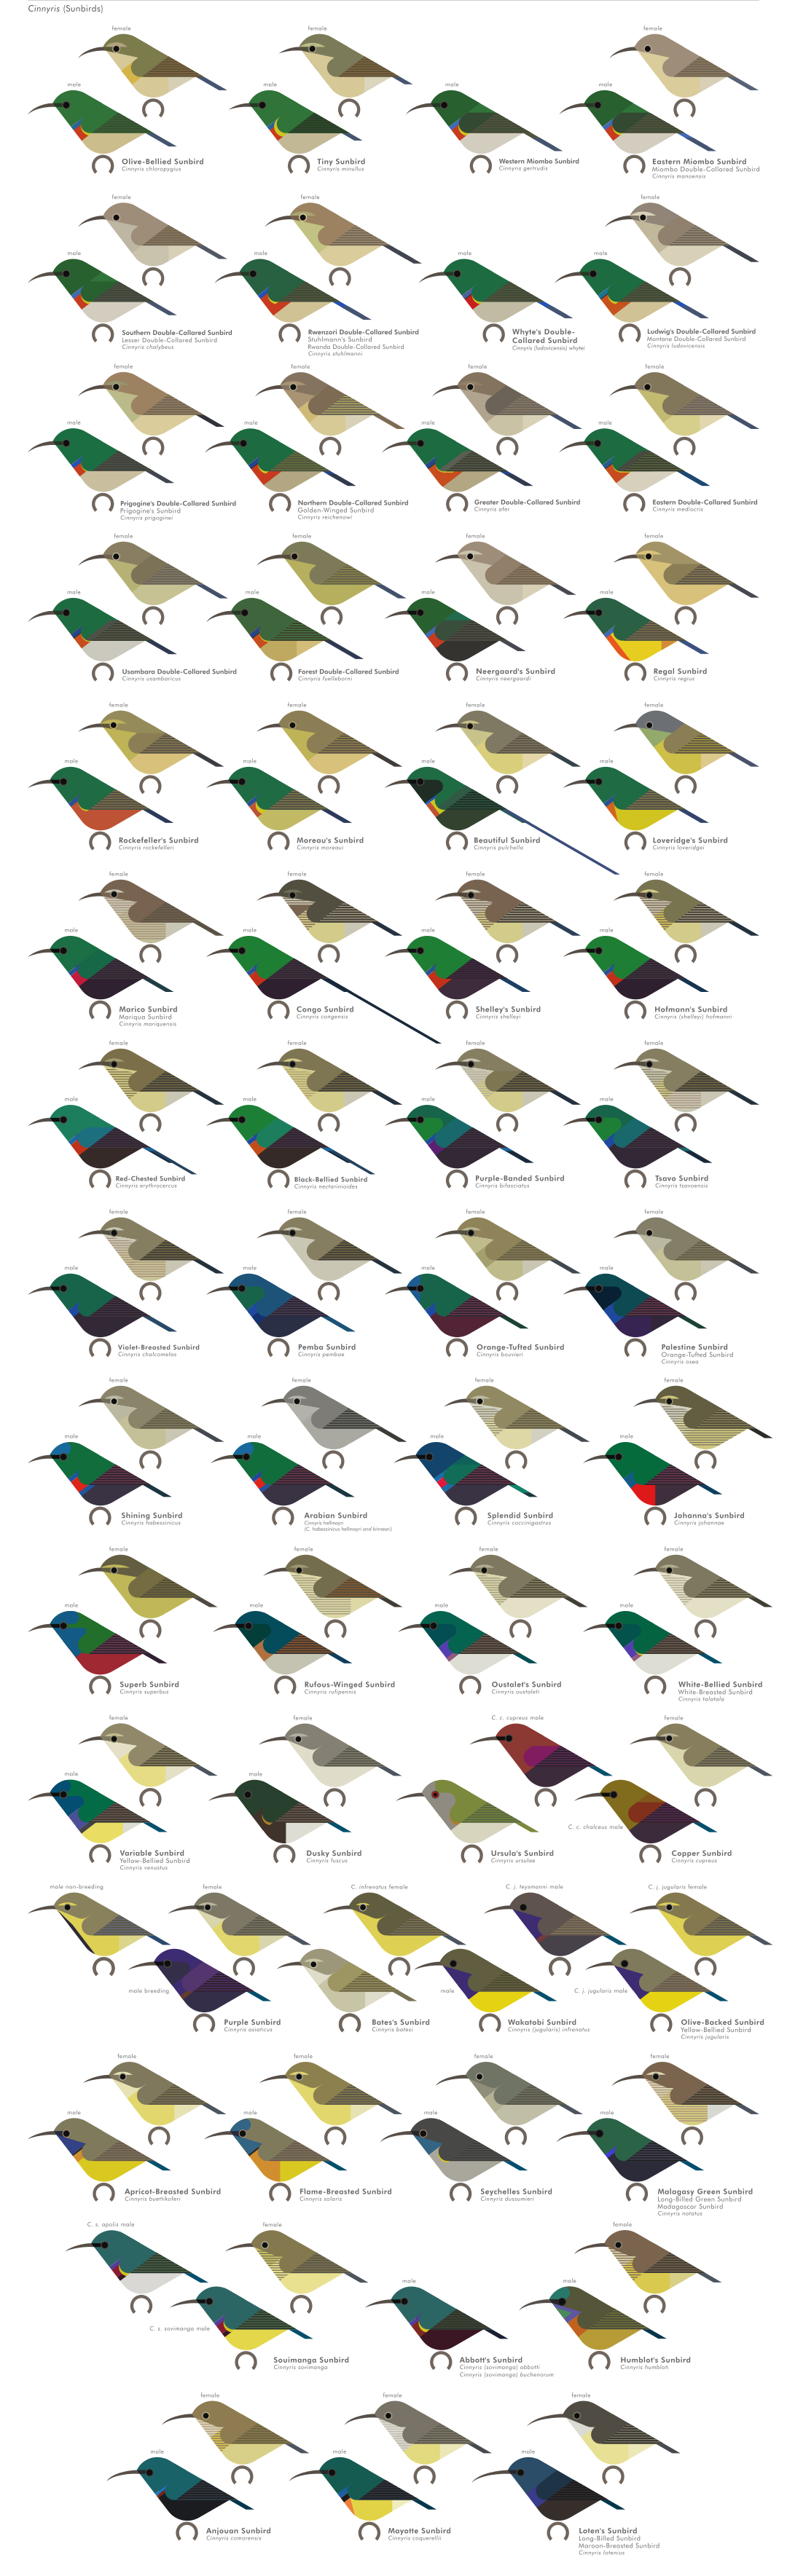 scott partridge - AVE - avian vector encyclopedia - sunbirds - bird vector art